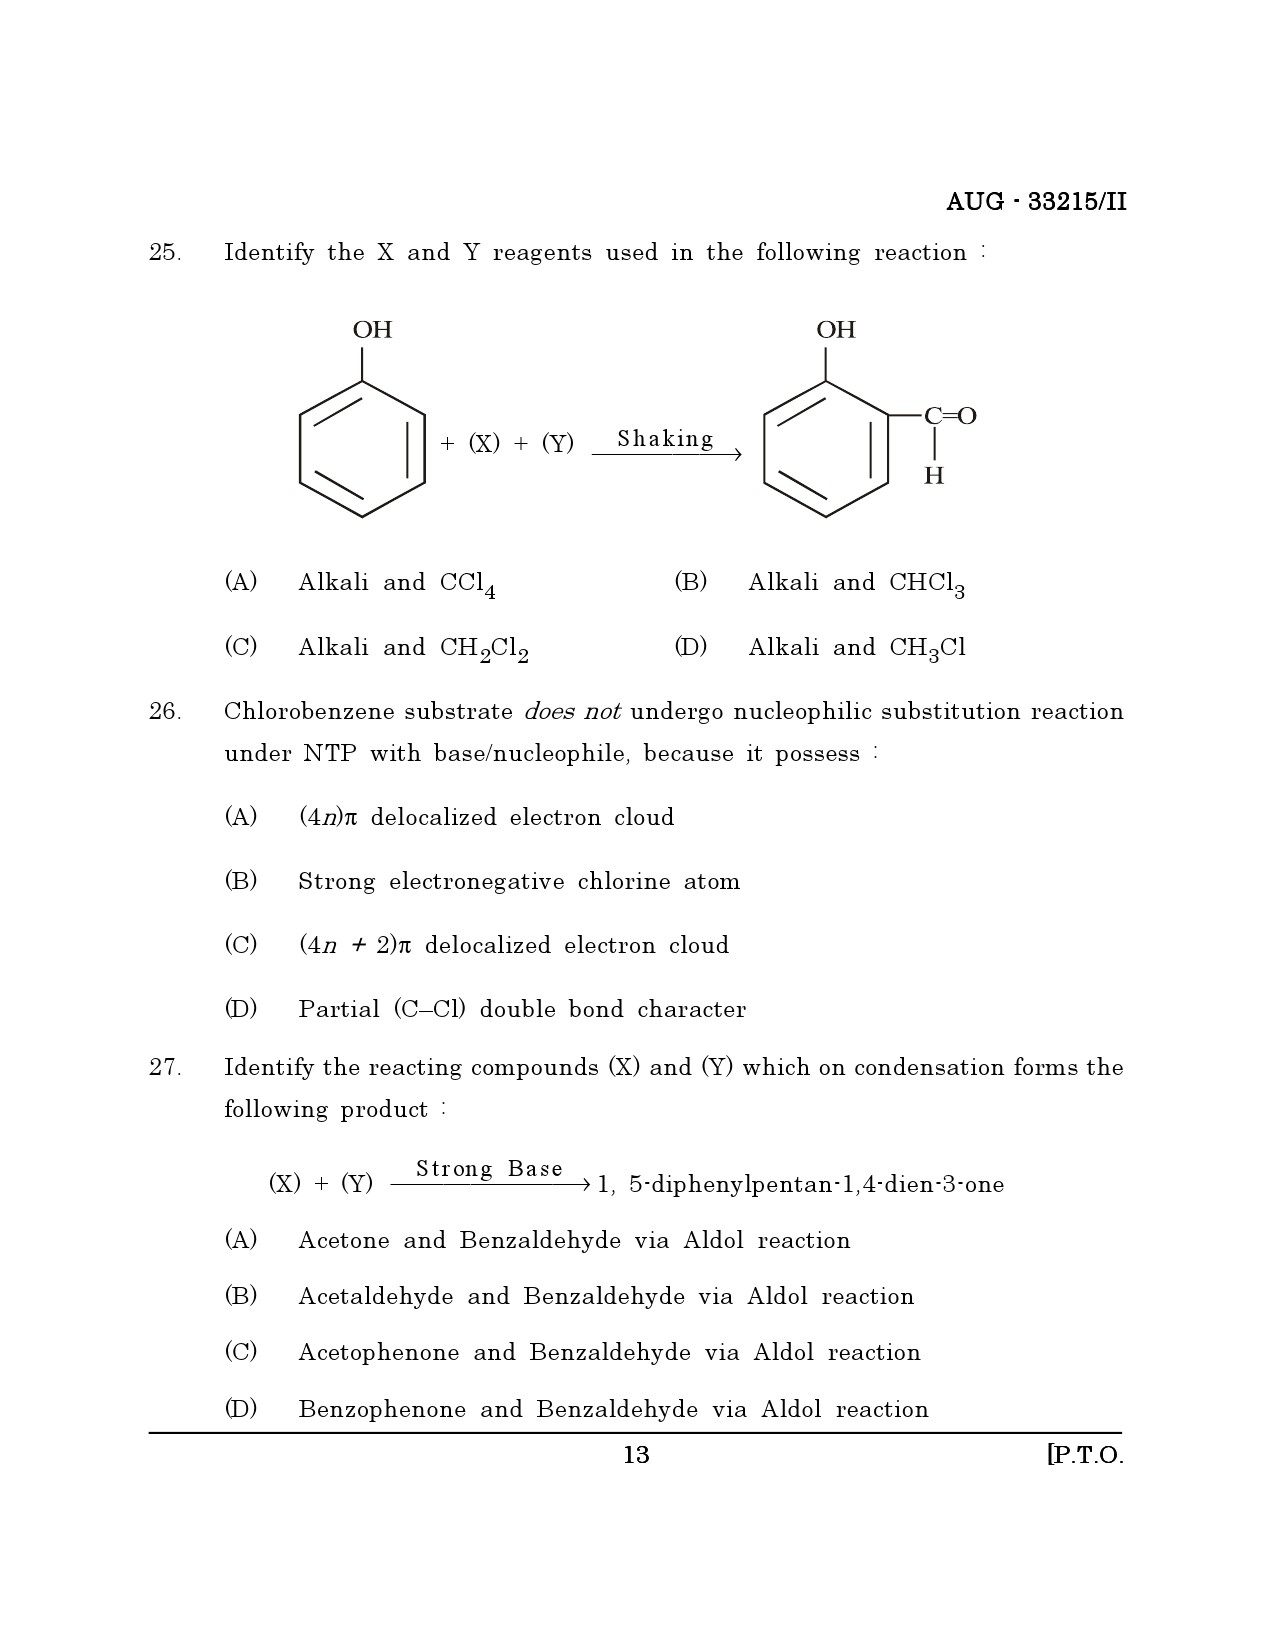 Maharashtra SET Chemical Sciences Question Paper II August 2015 12